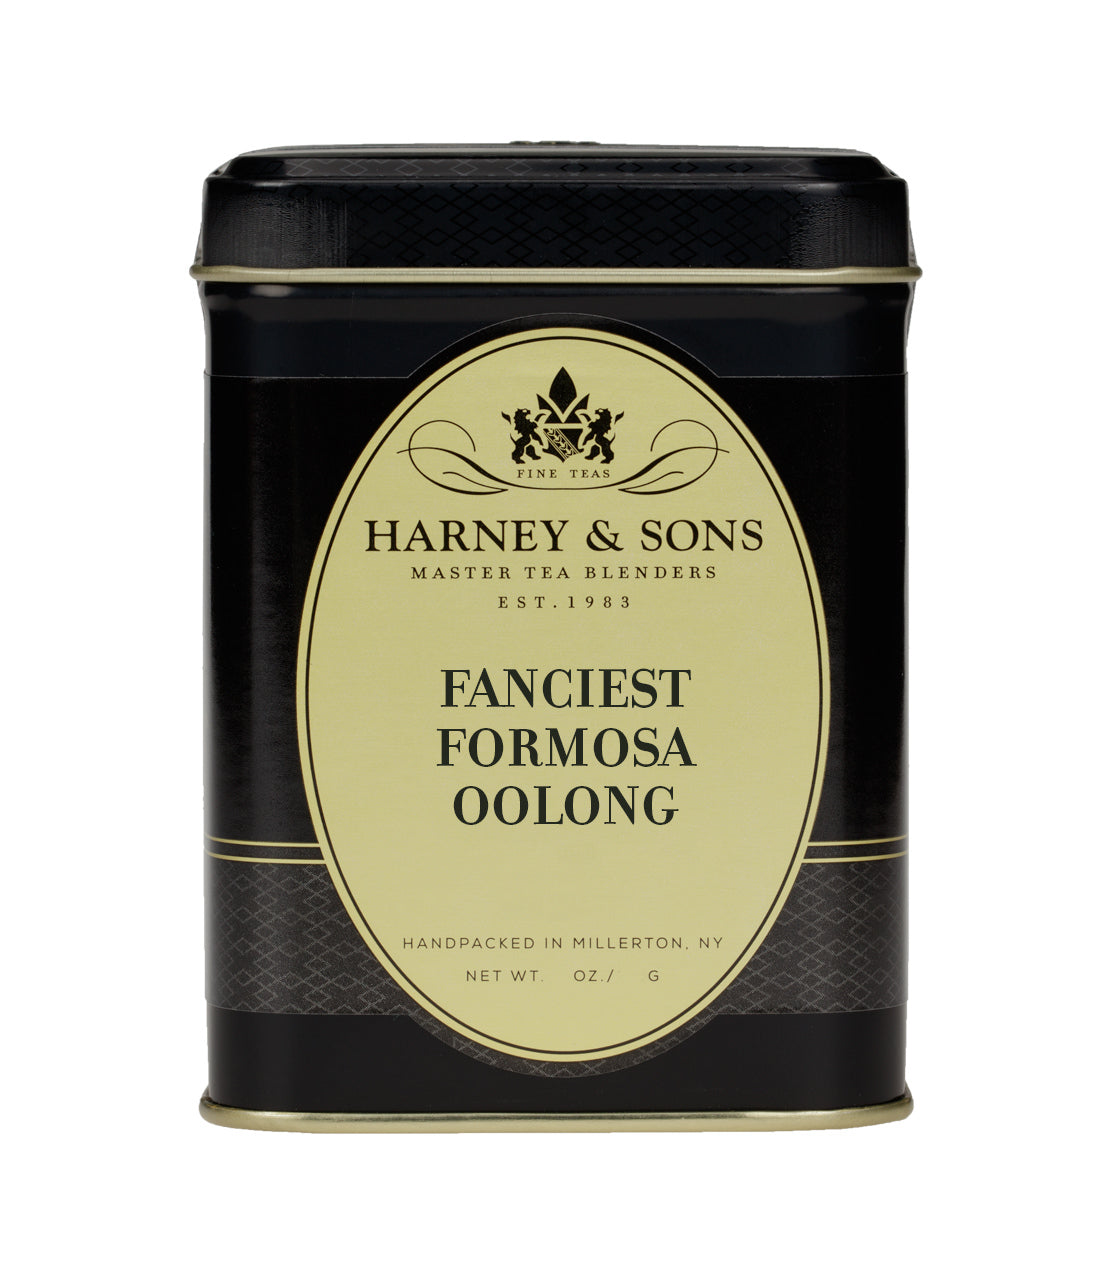 Fanciest Formosa Oolong - Loose 2 oz. Tin - Harney & Sons Fine Teas